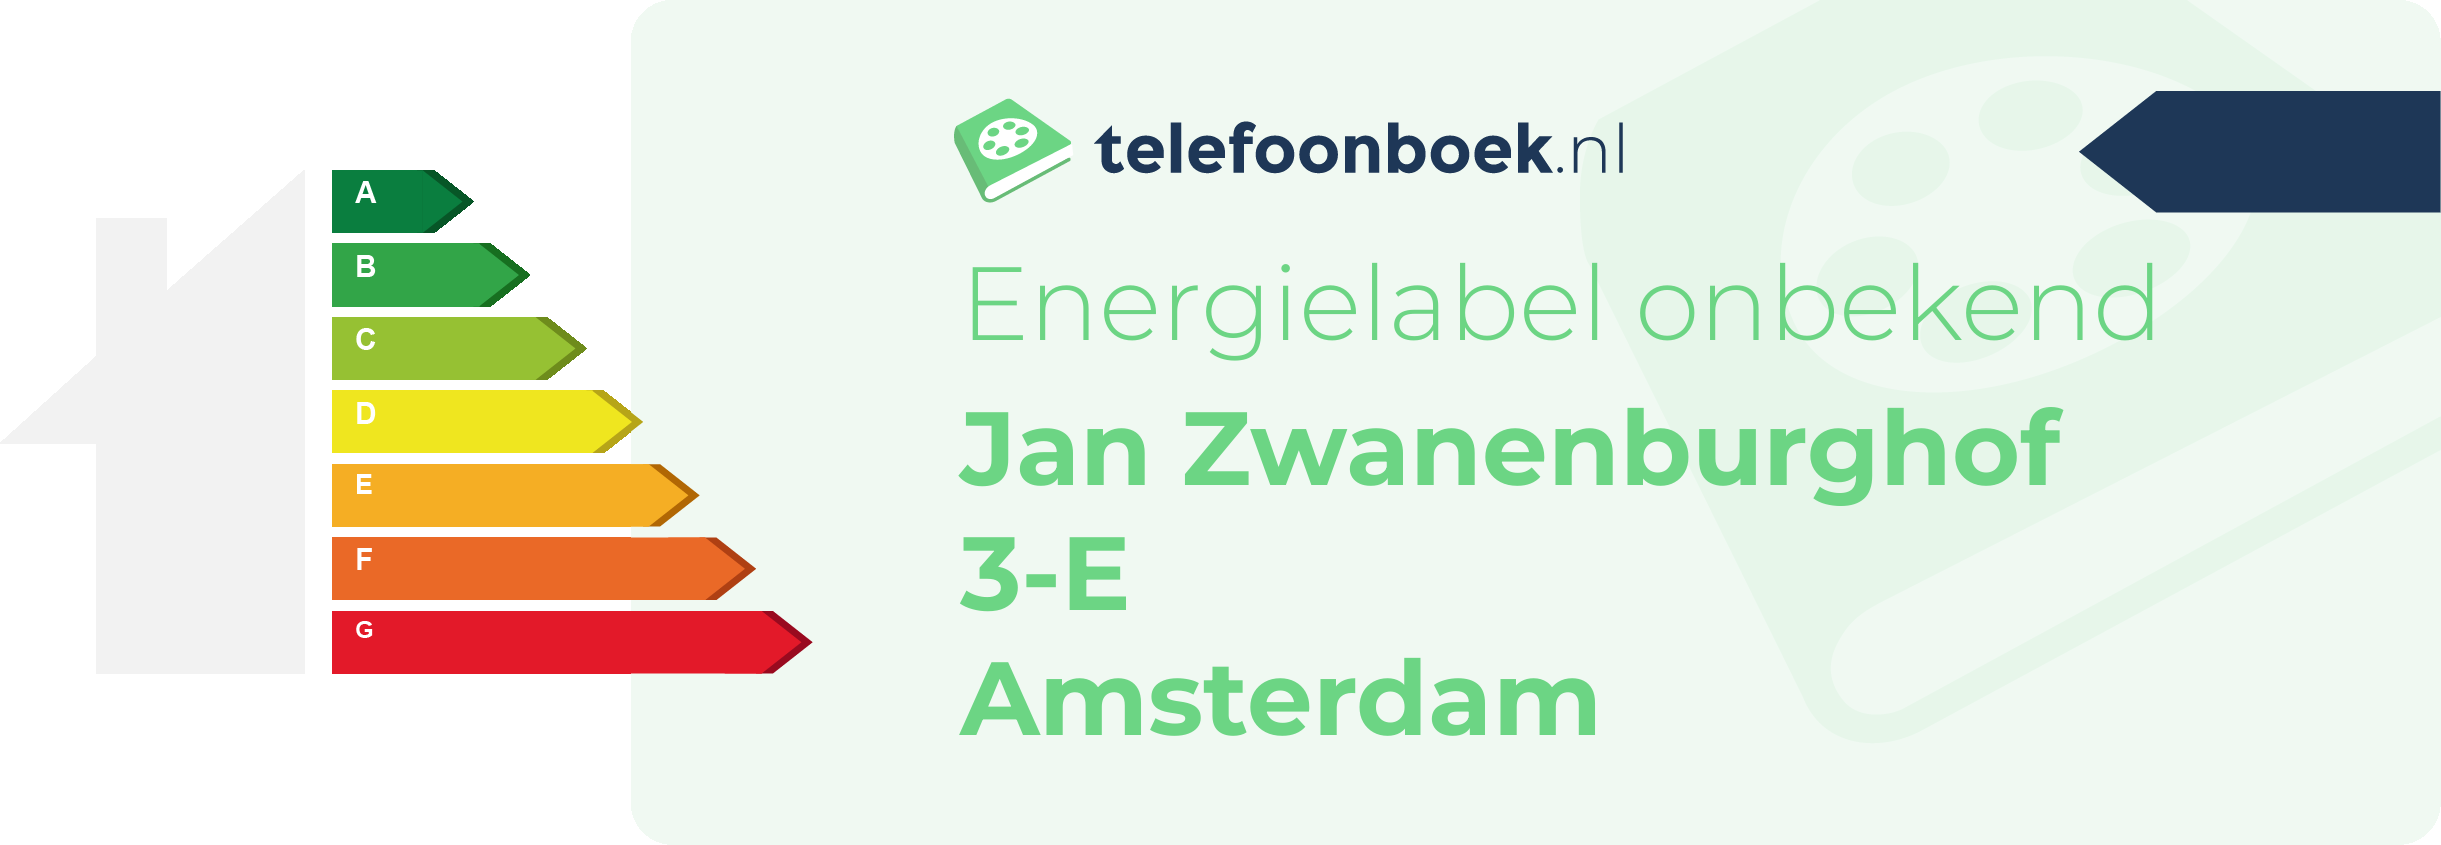 Energielabel Jan Zwanenburghof 3-E Amsterdam